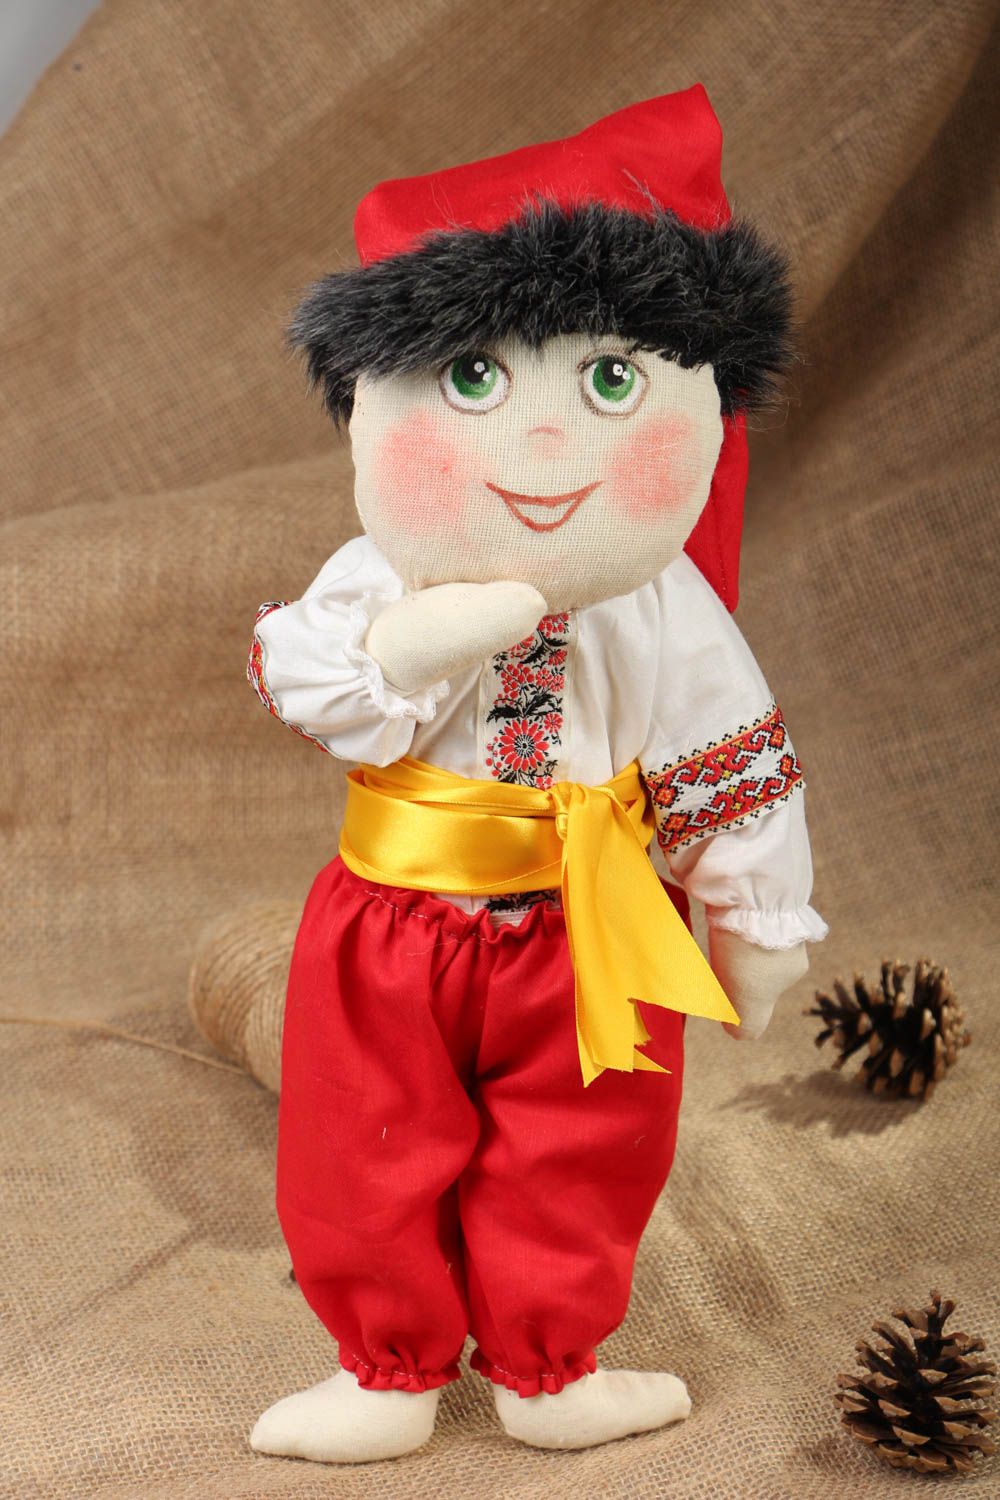 Textil Puppe Junge in Ethno Kleidung foto 5